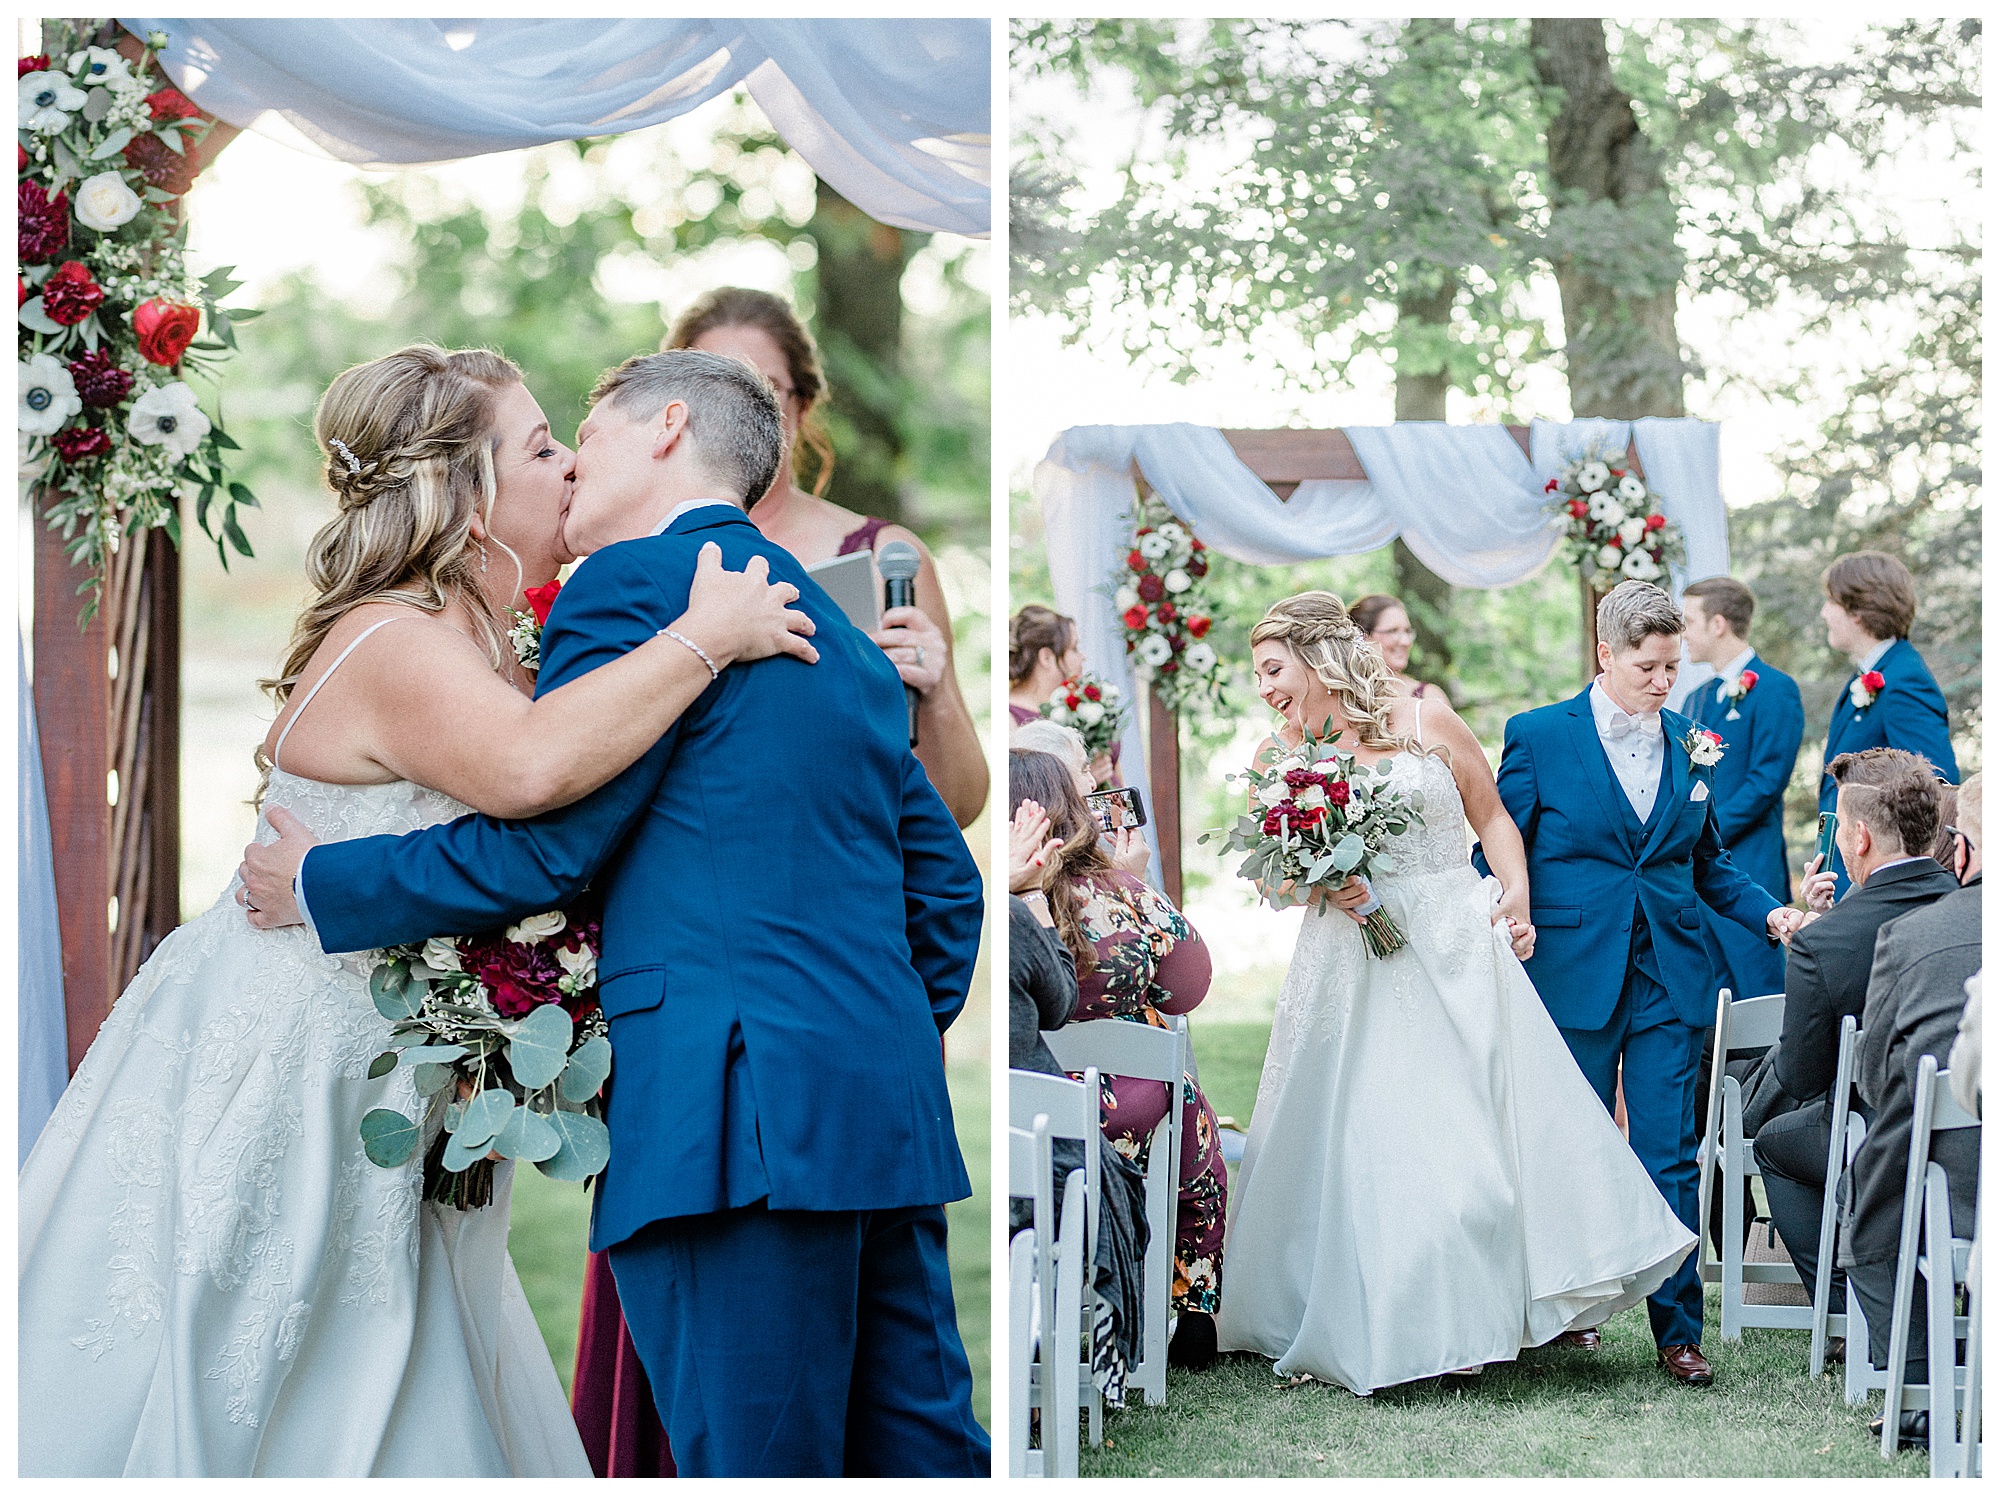 First kiss at a Minneapolis fall lakeside wedding. Photo by Kayla Lee.